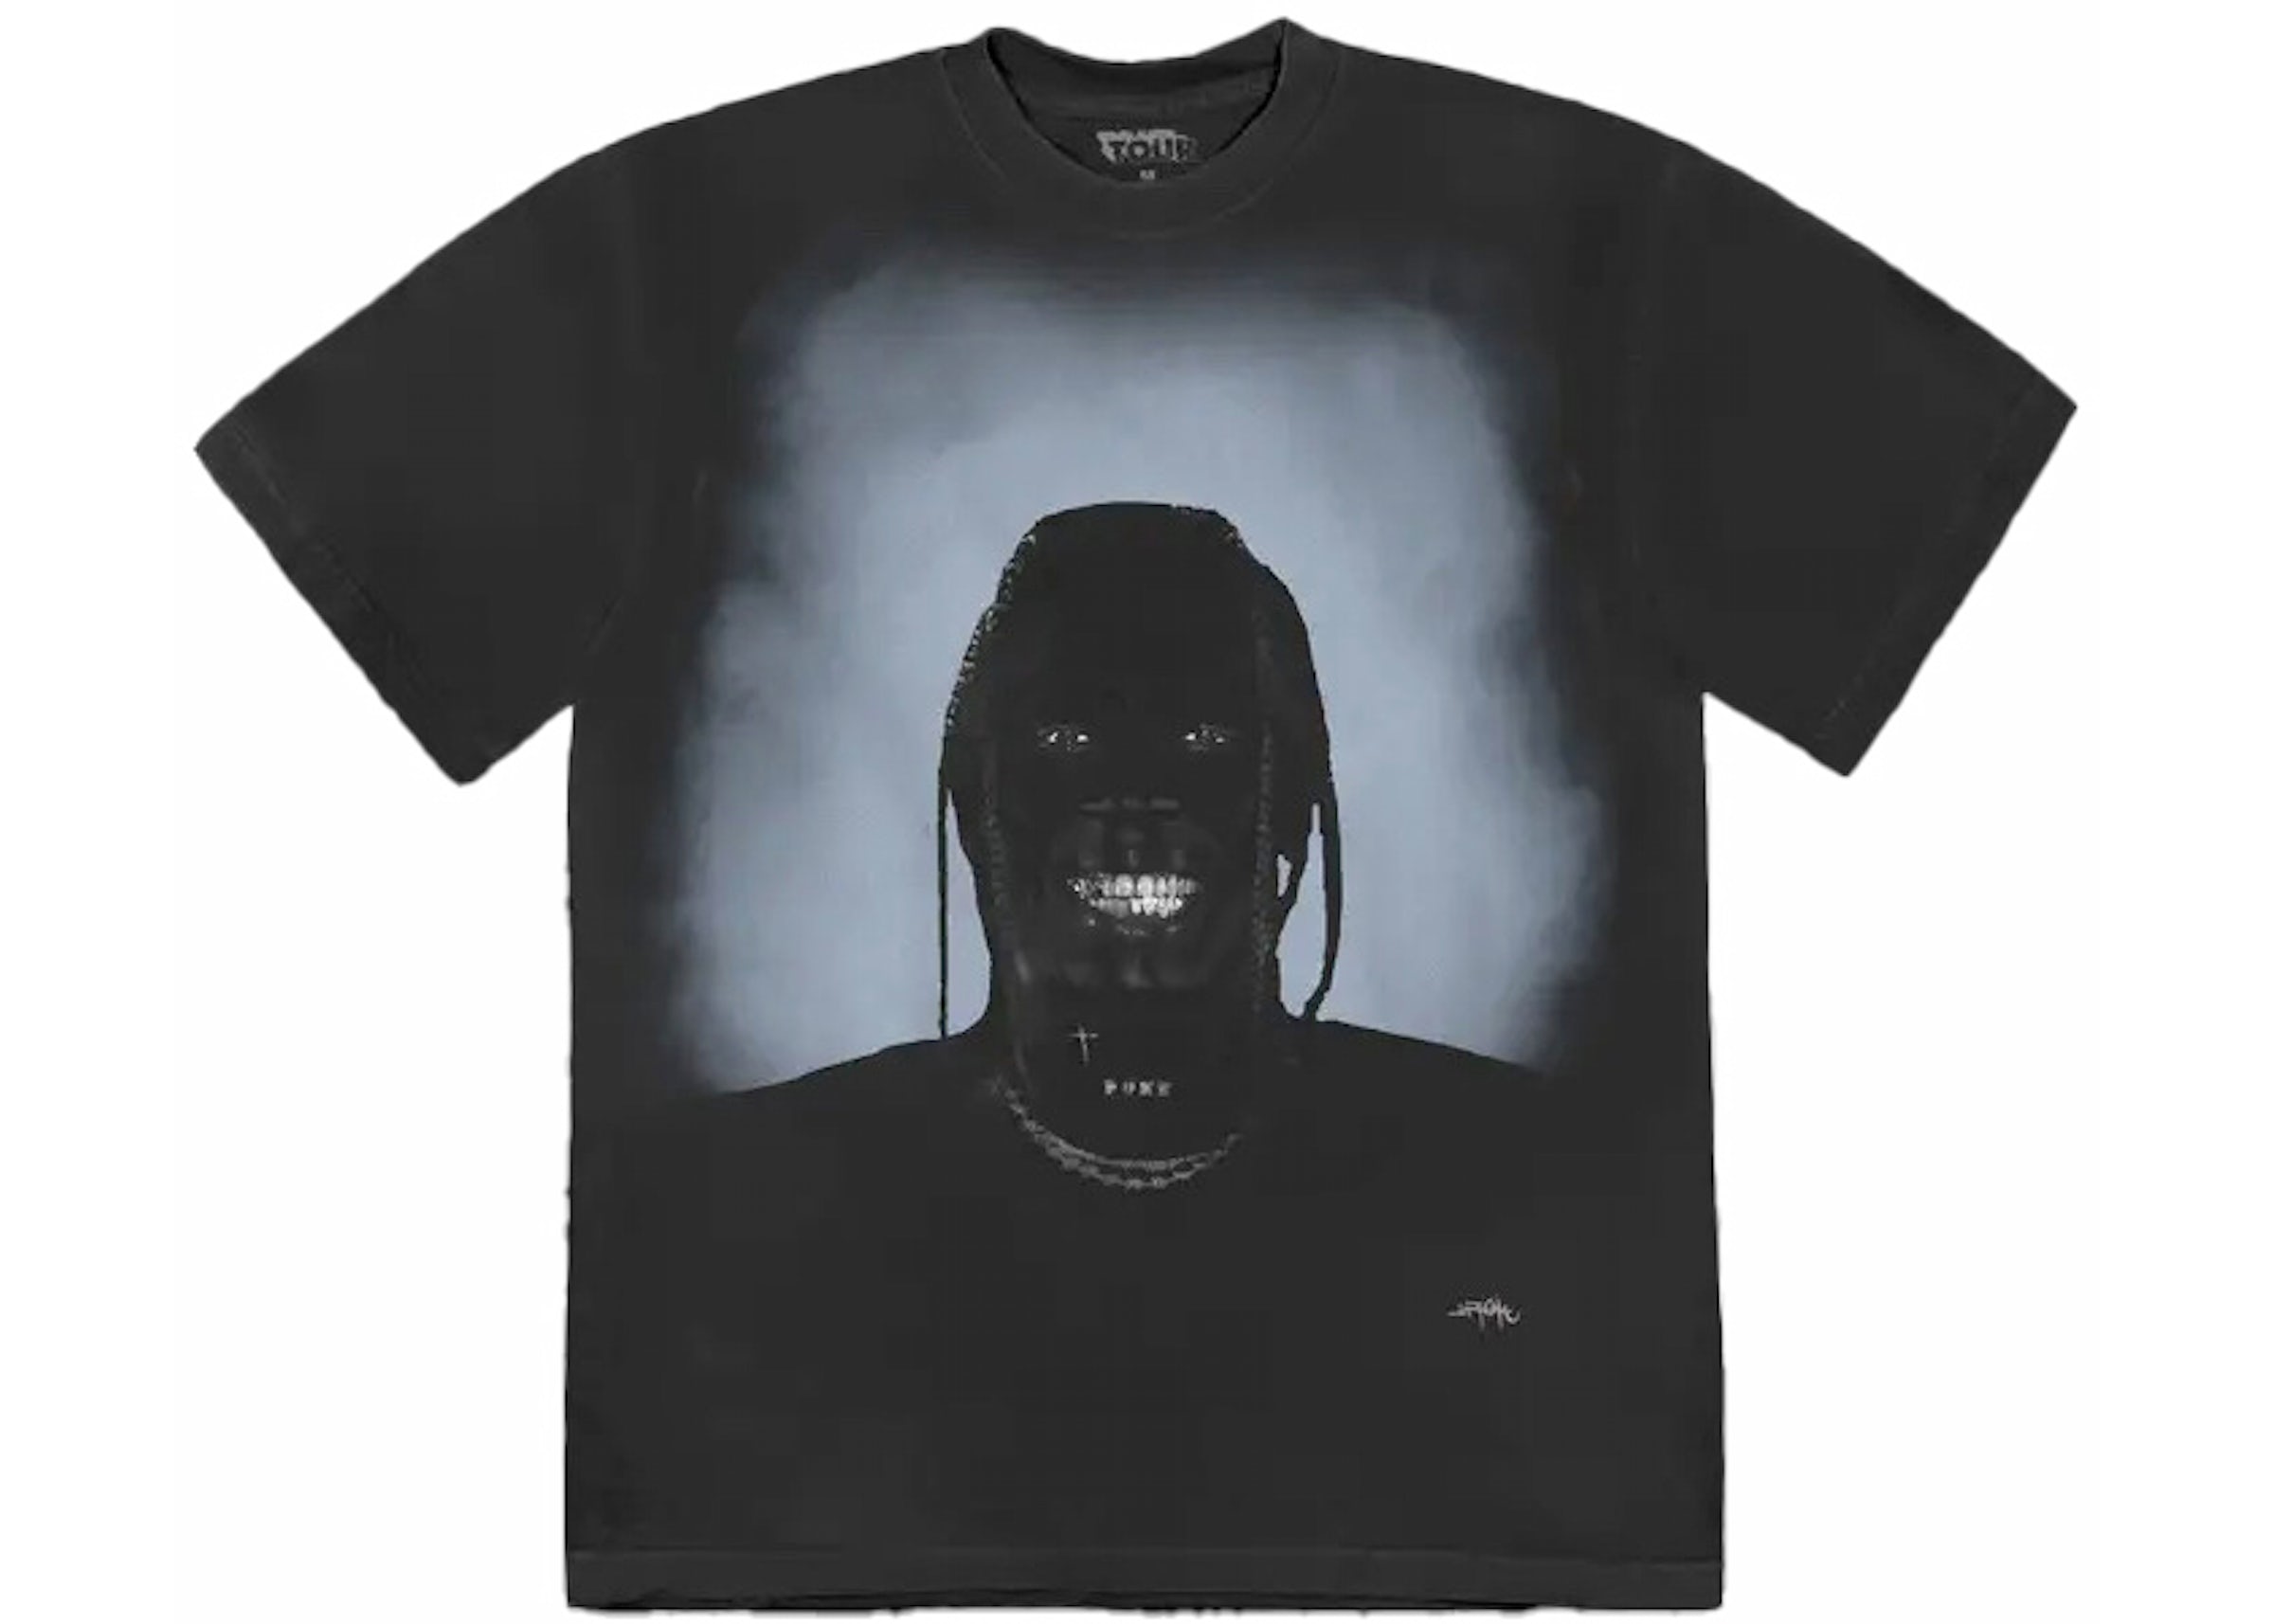 Buy Travis Scott Merch: T-Shirts, Hoodies, Apparel